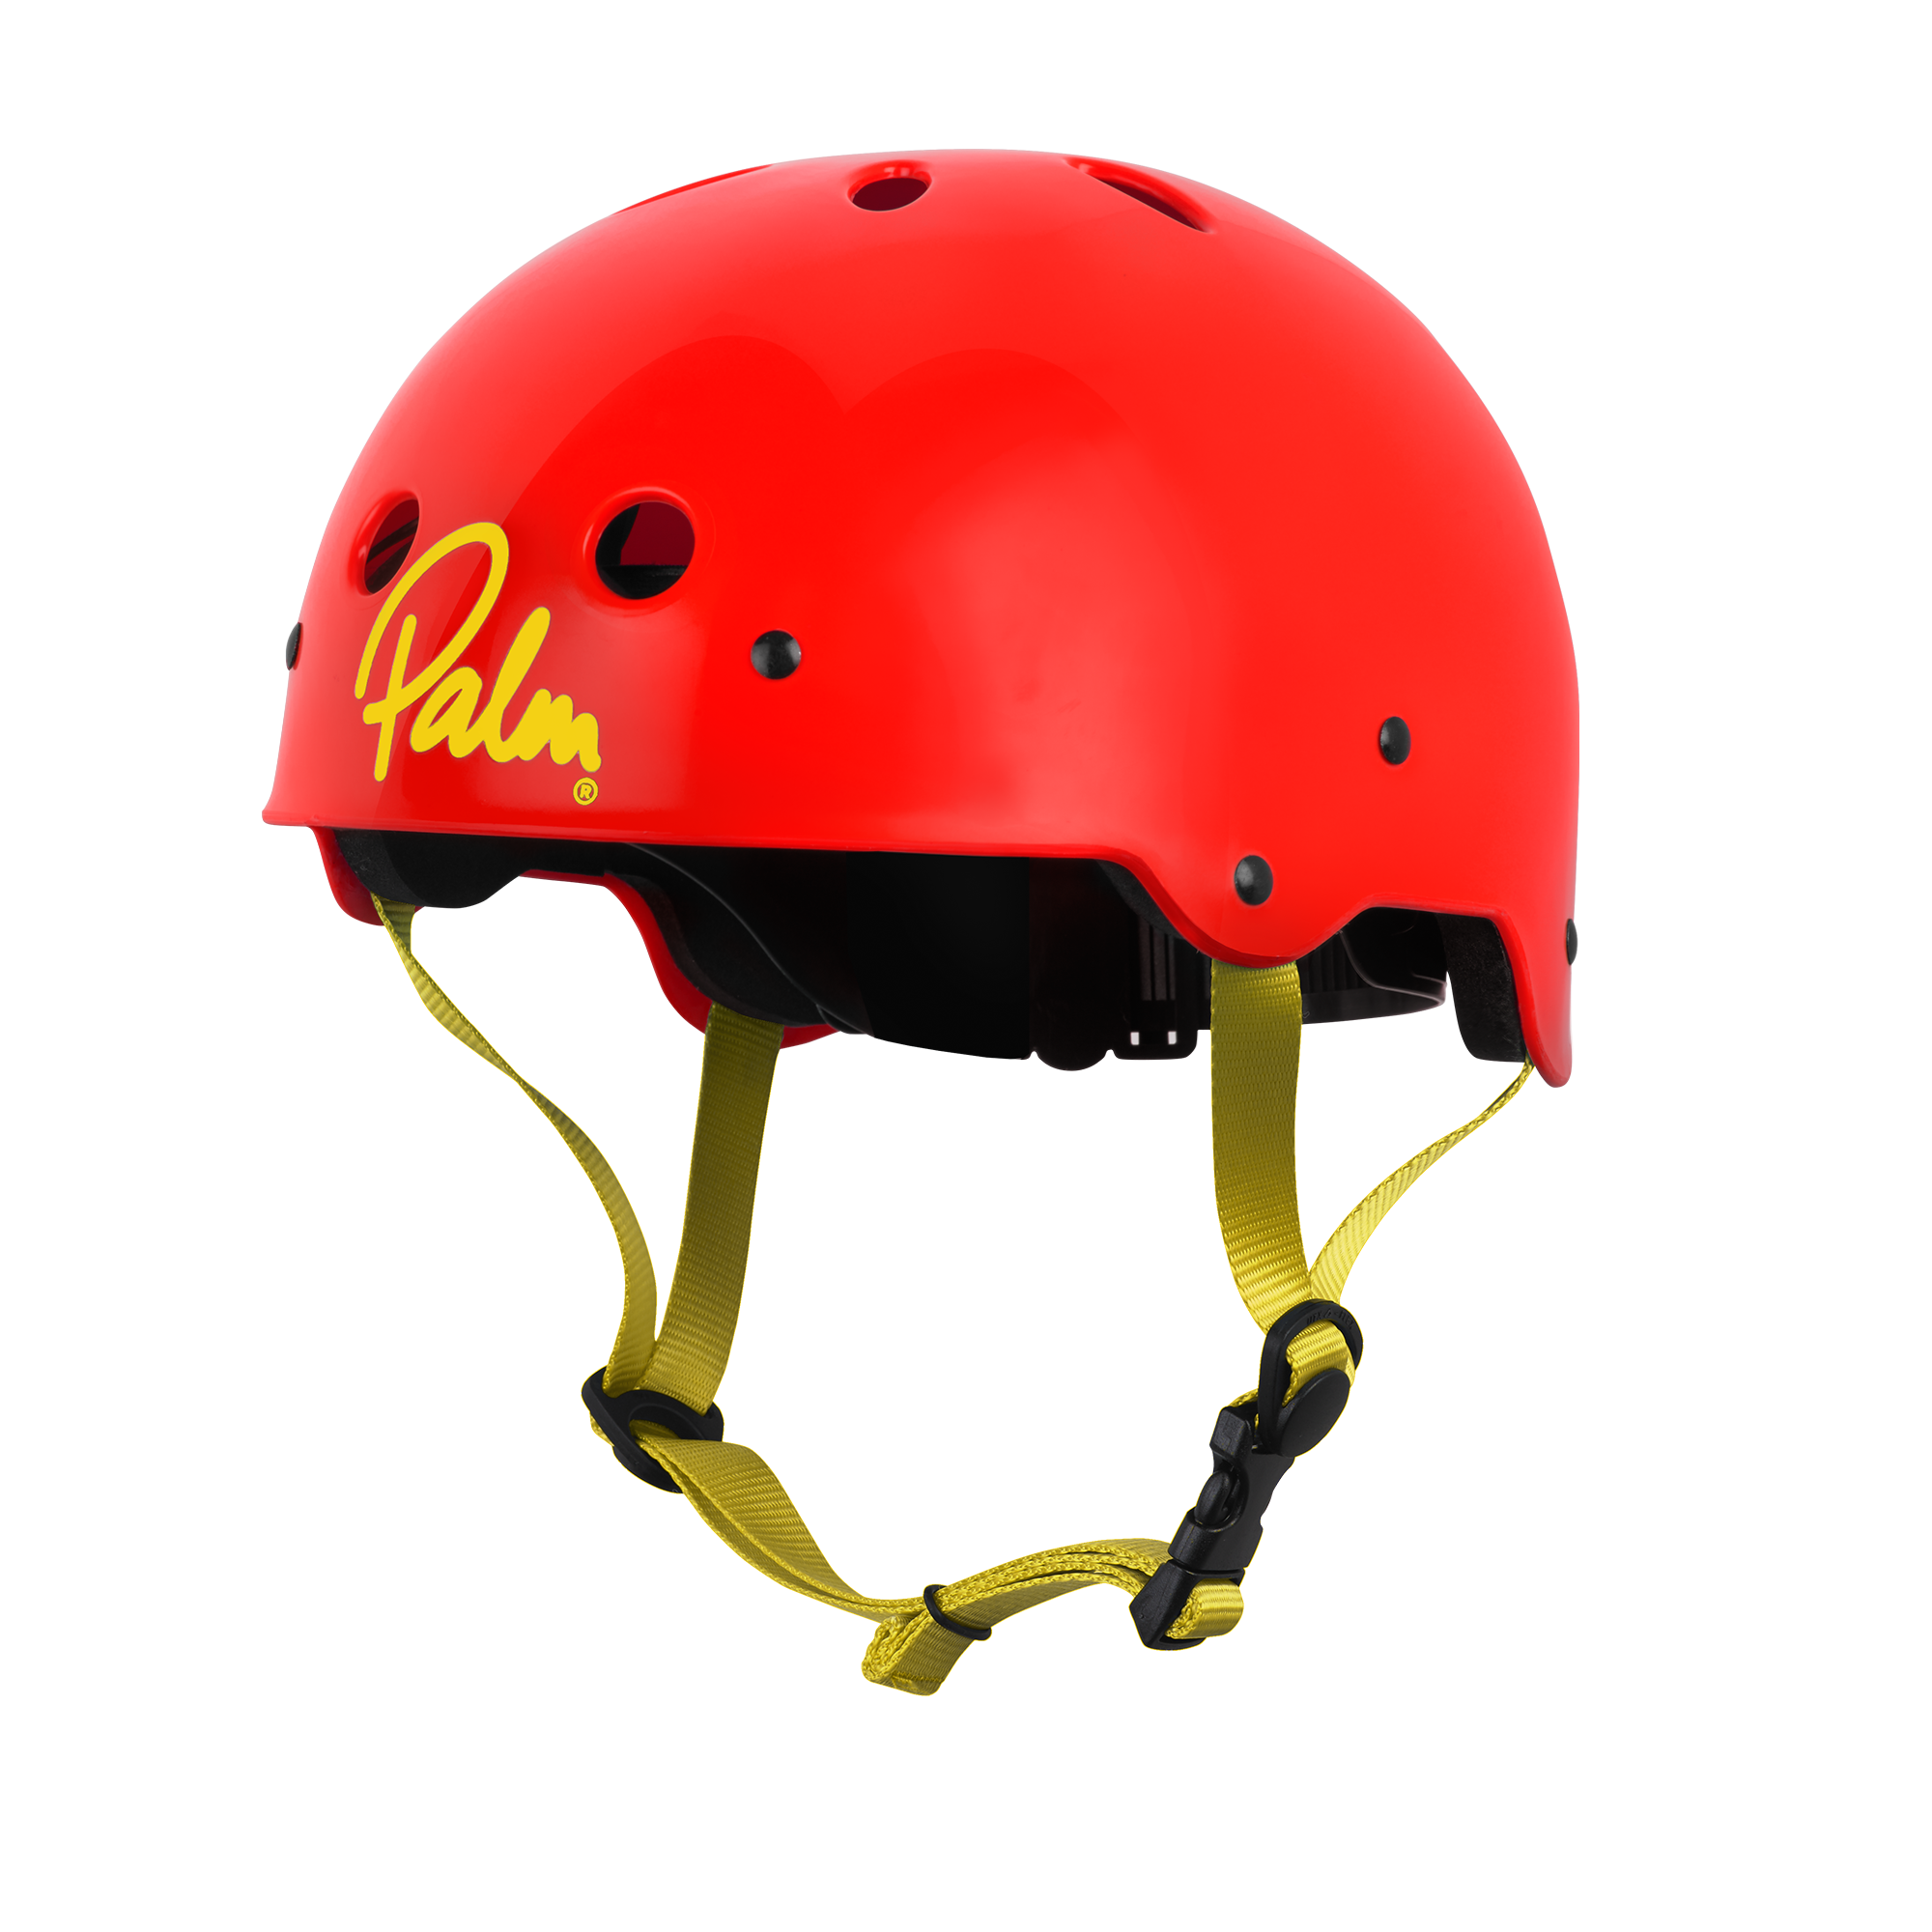 A Red Palm AP4000 Watersports helmet